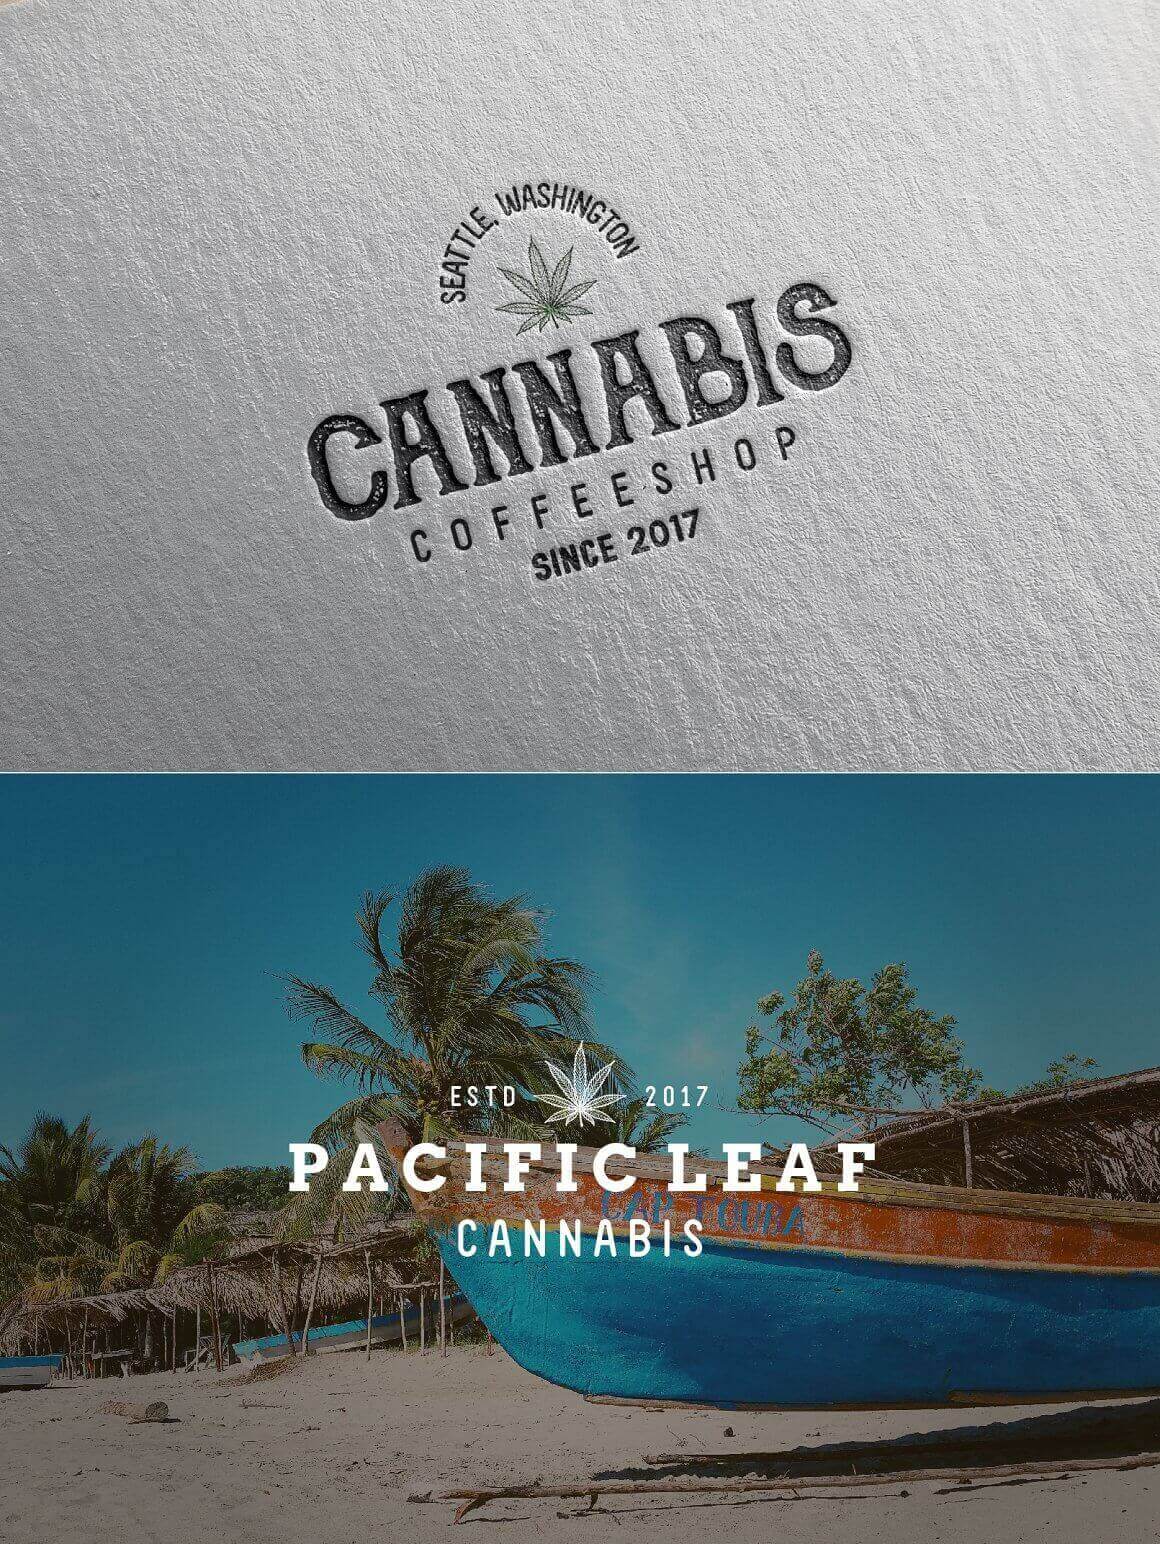 Cannabis Coffeeshop Since 2017.